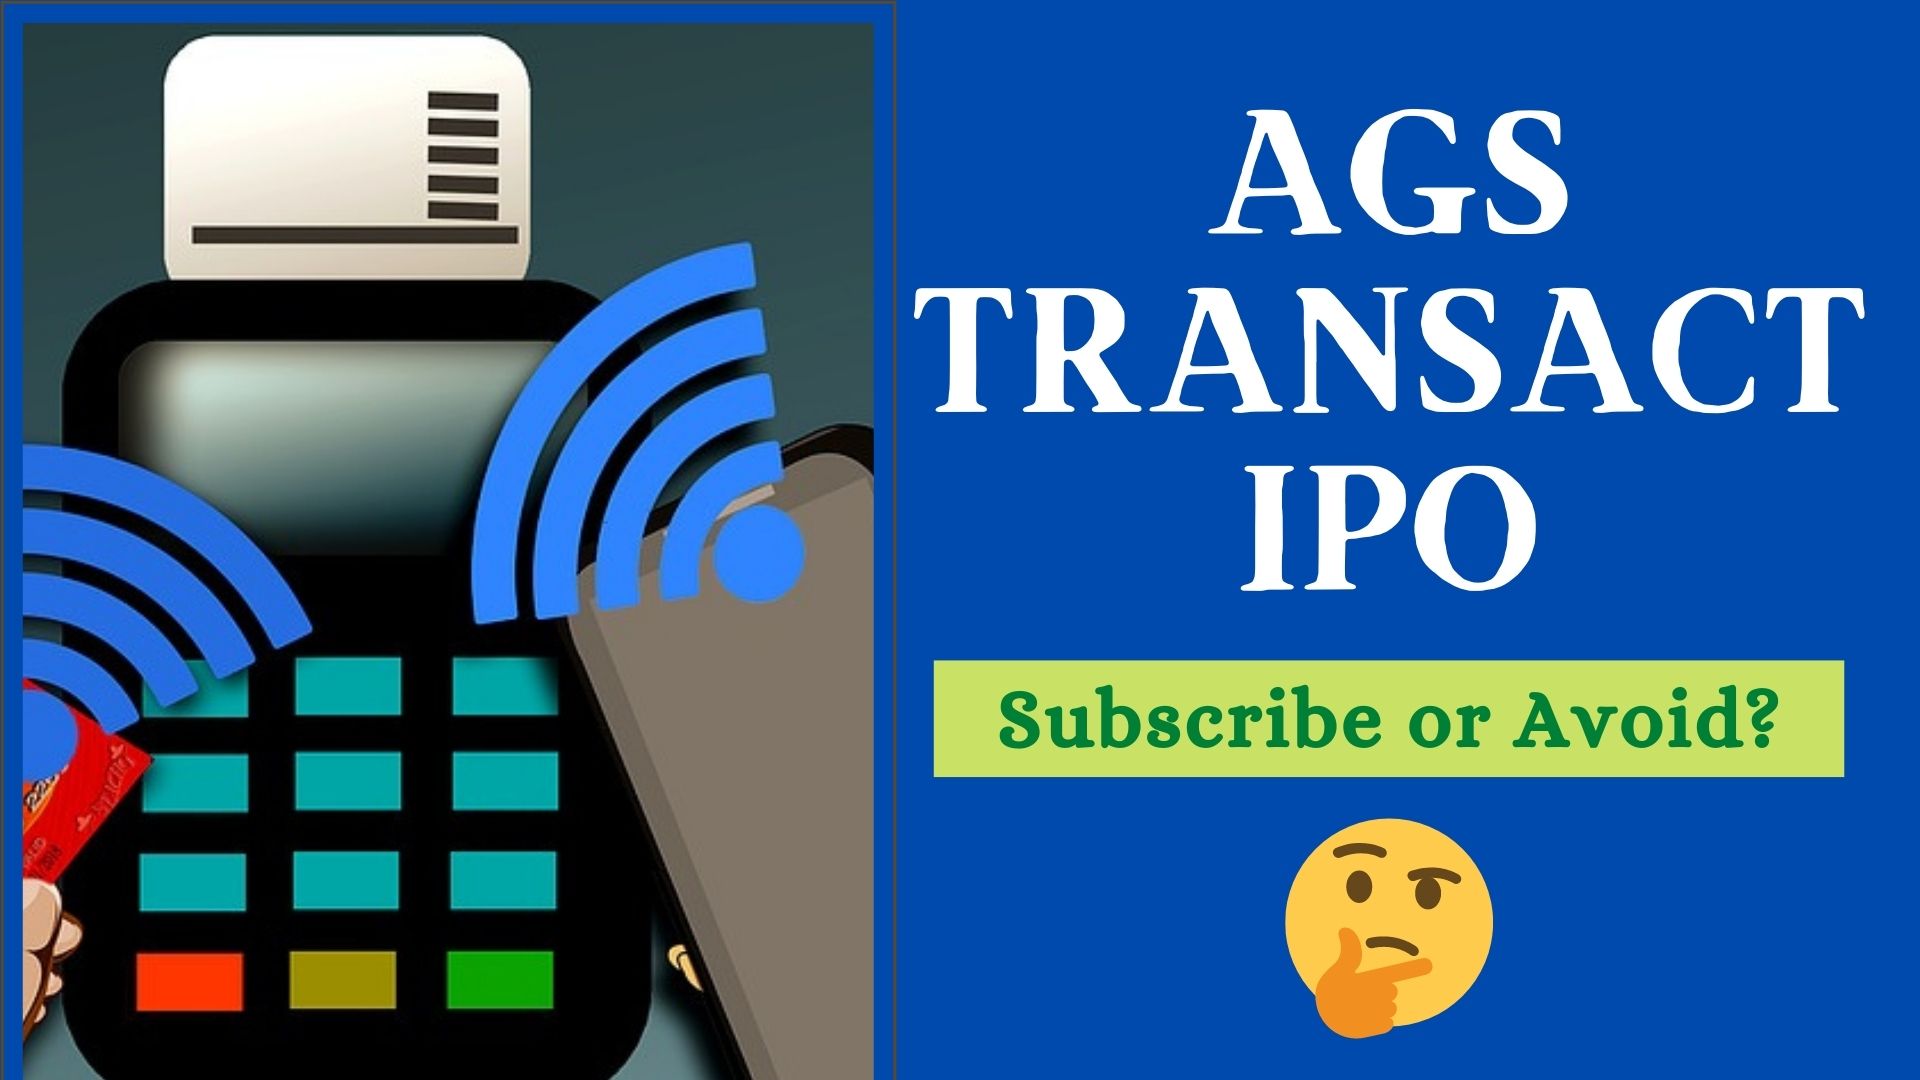 AGS Transact IPO